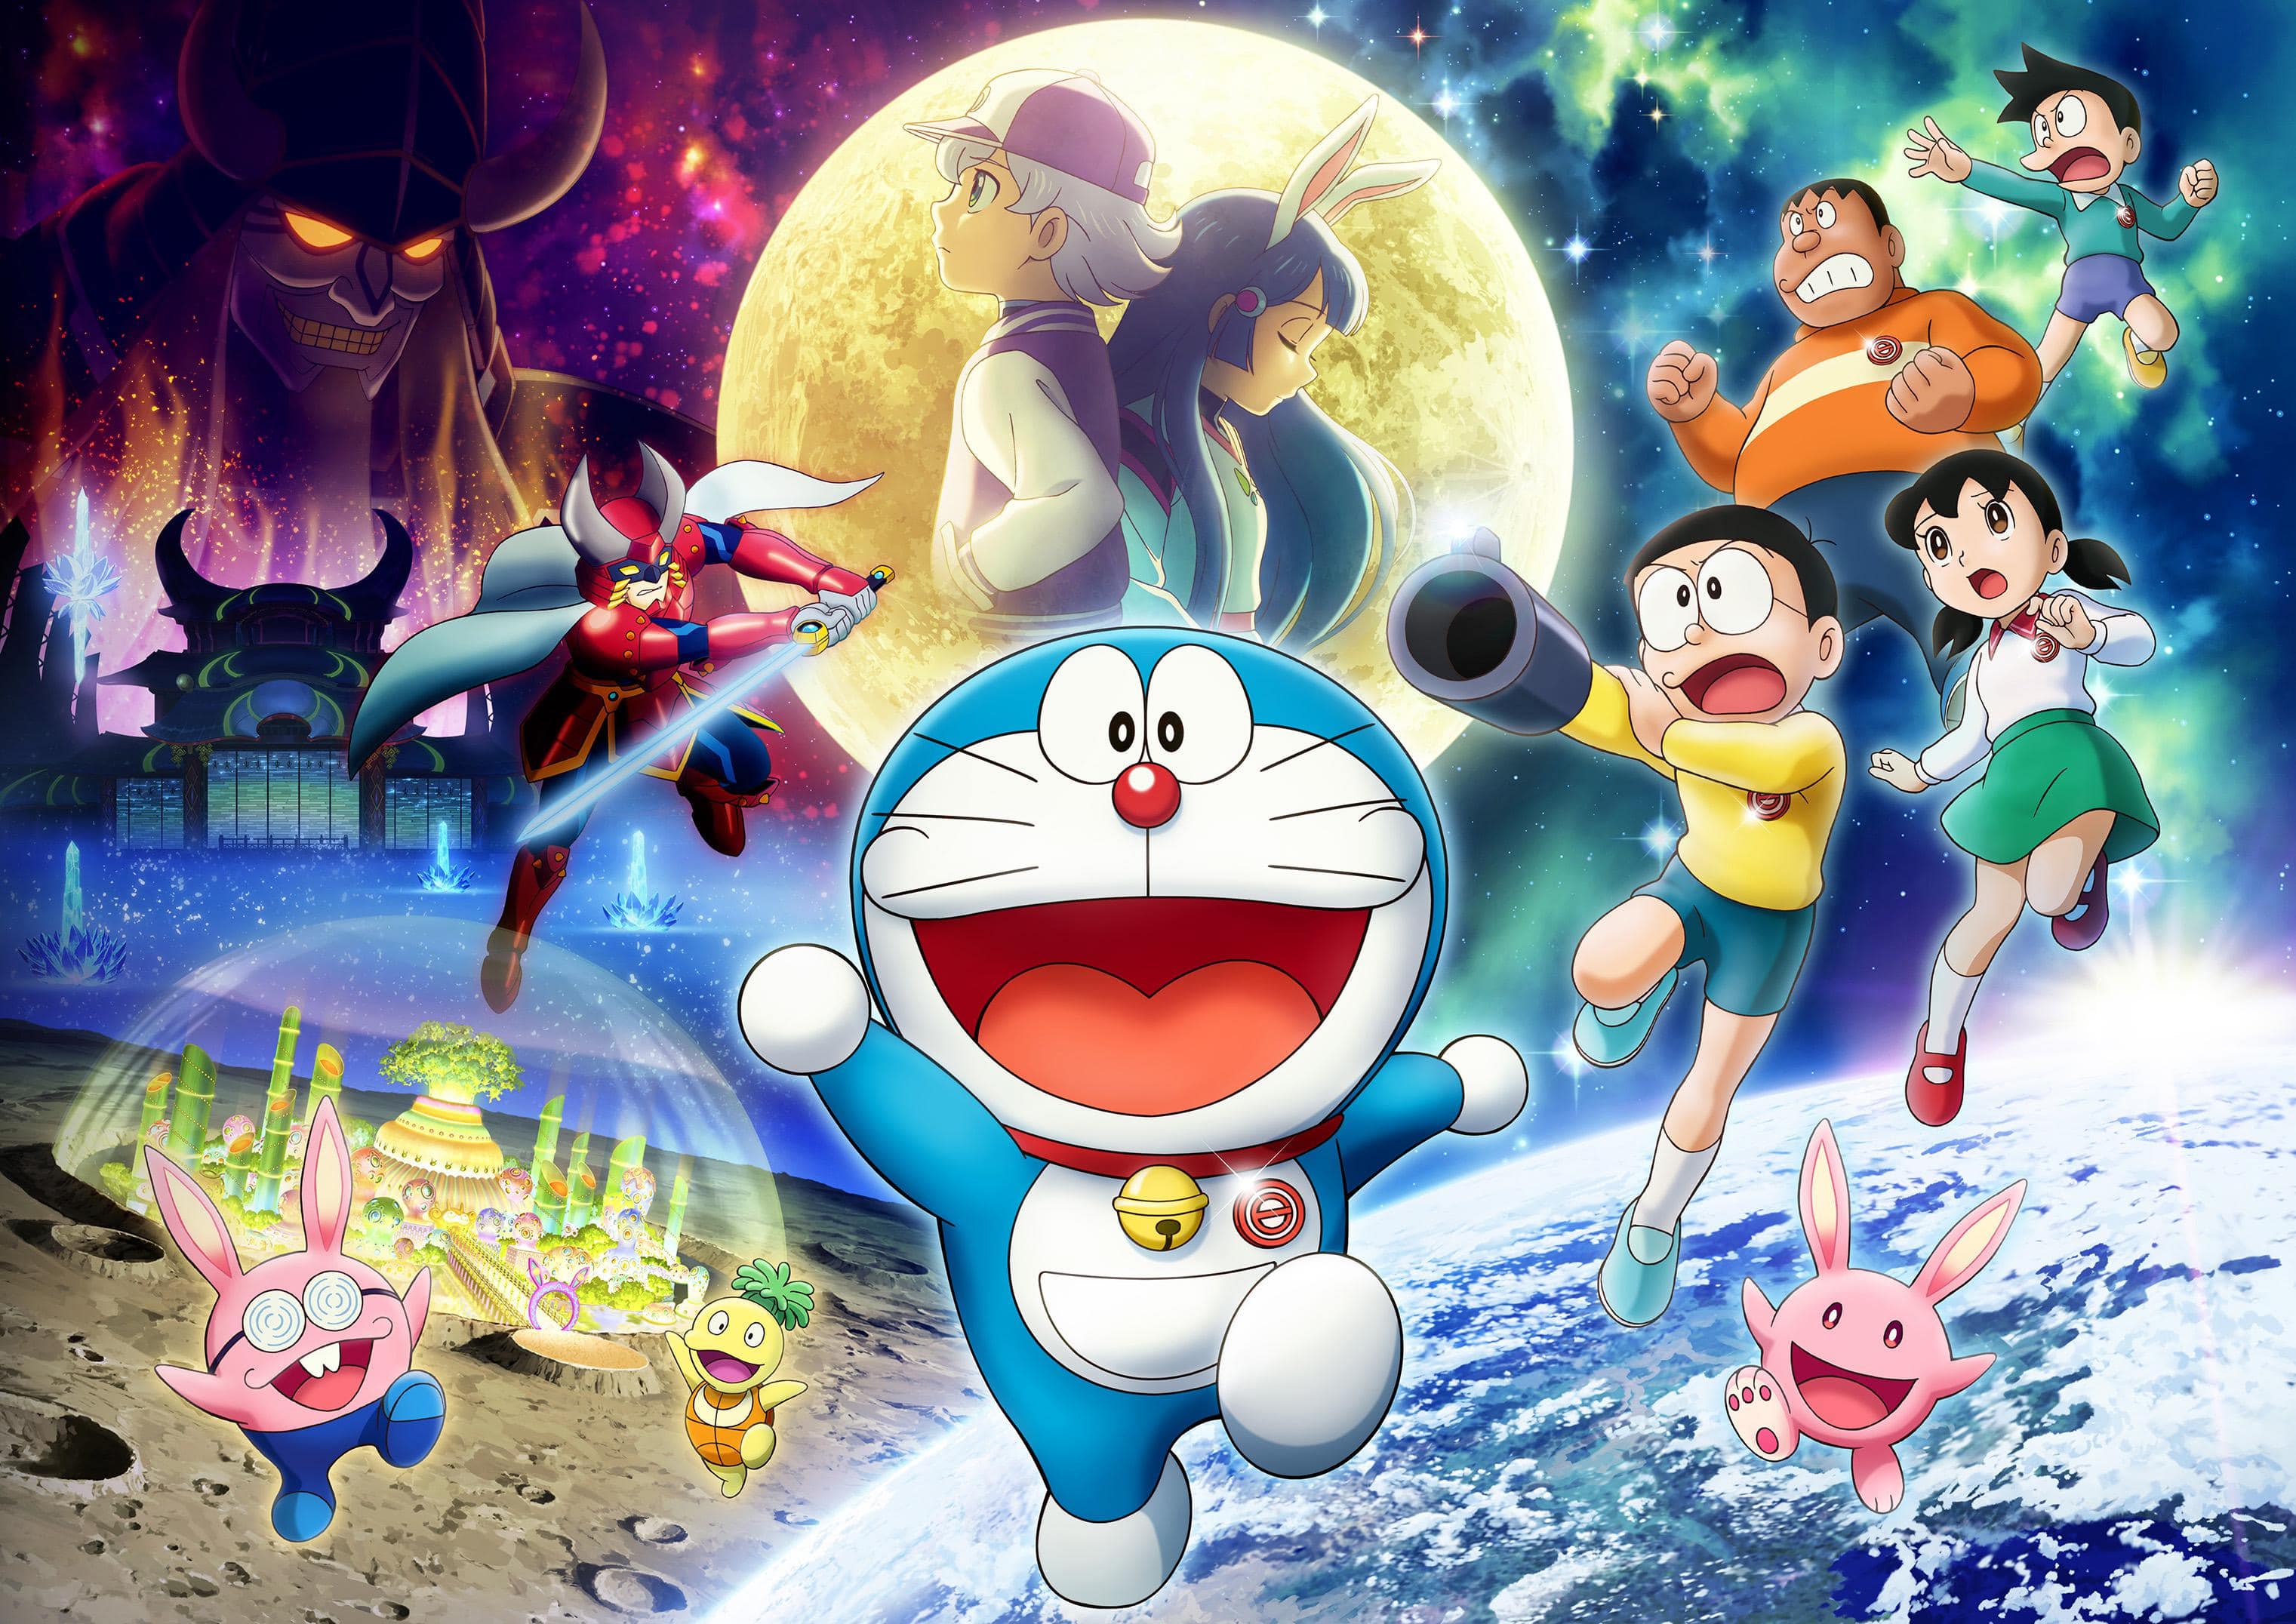 39th Doraemon Film’s South Korean Premiere Delayed Indefinitely